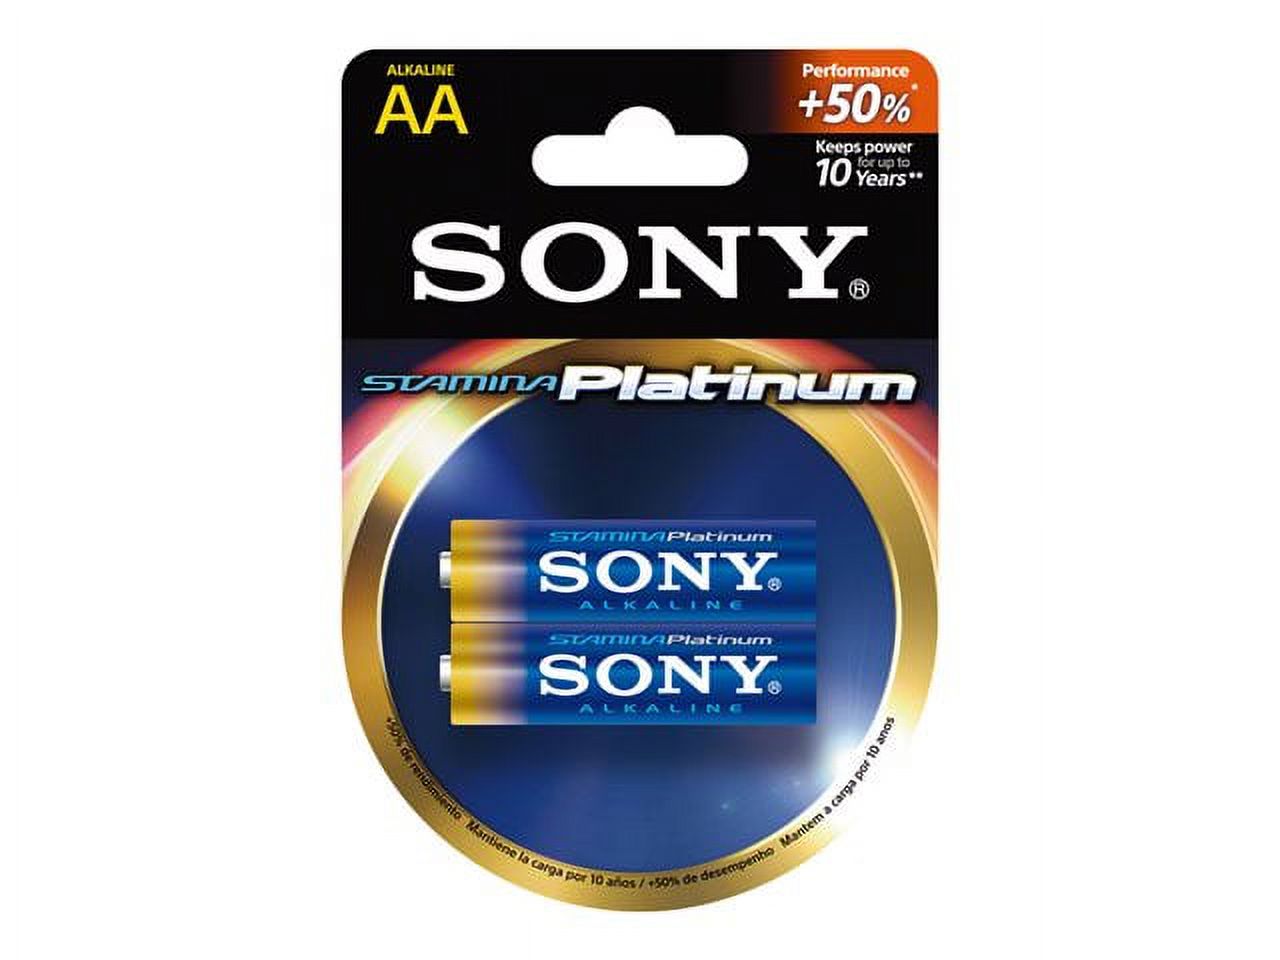 Sony Stamina Platinum AM3PT-B2D - Battery 2 x AA type - alkaline - image 2 of 10